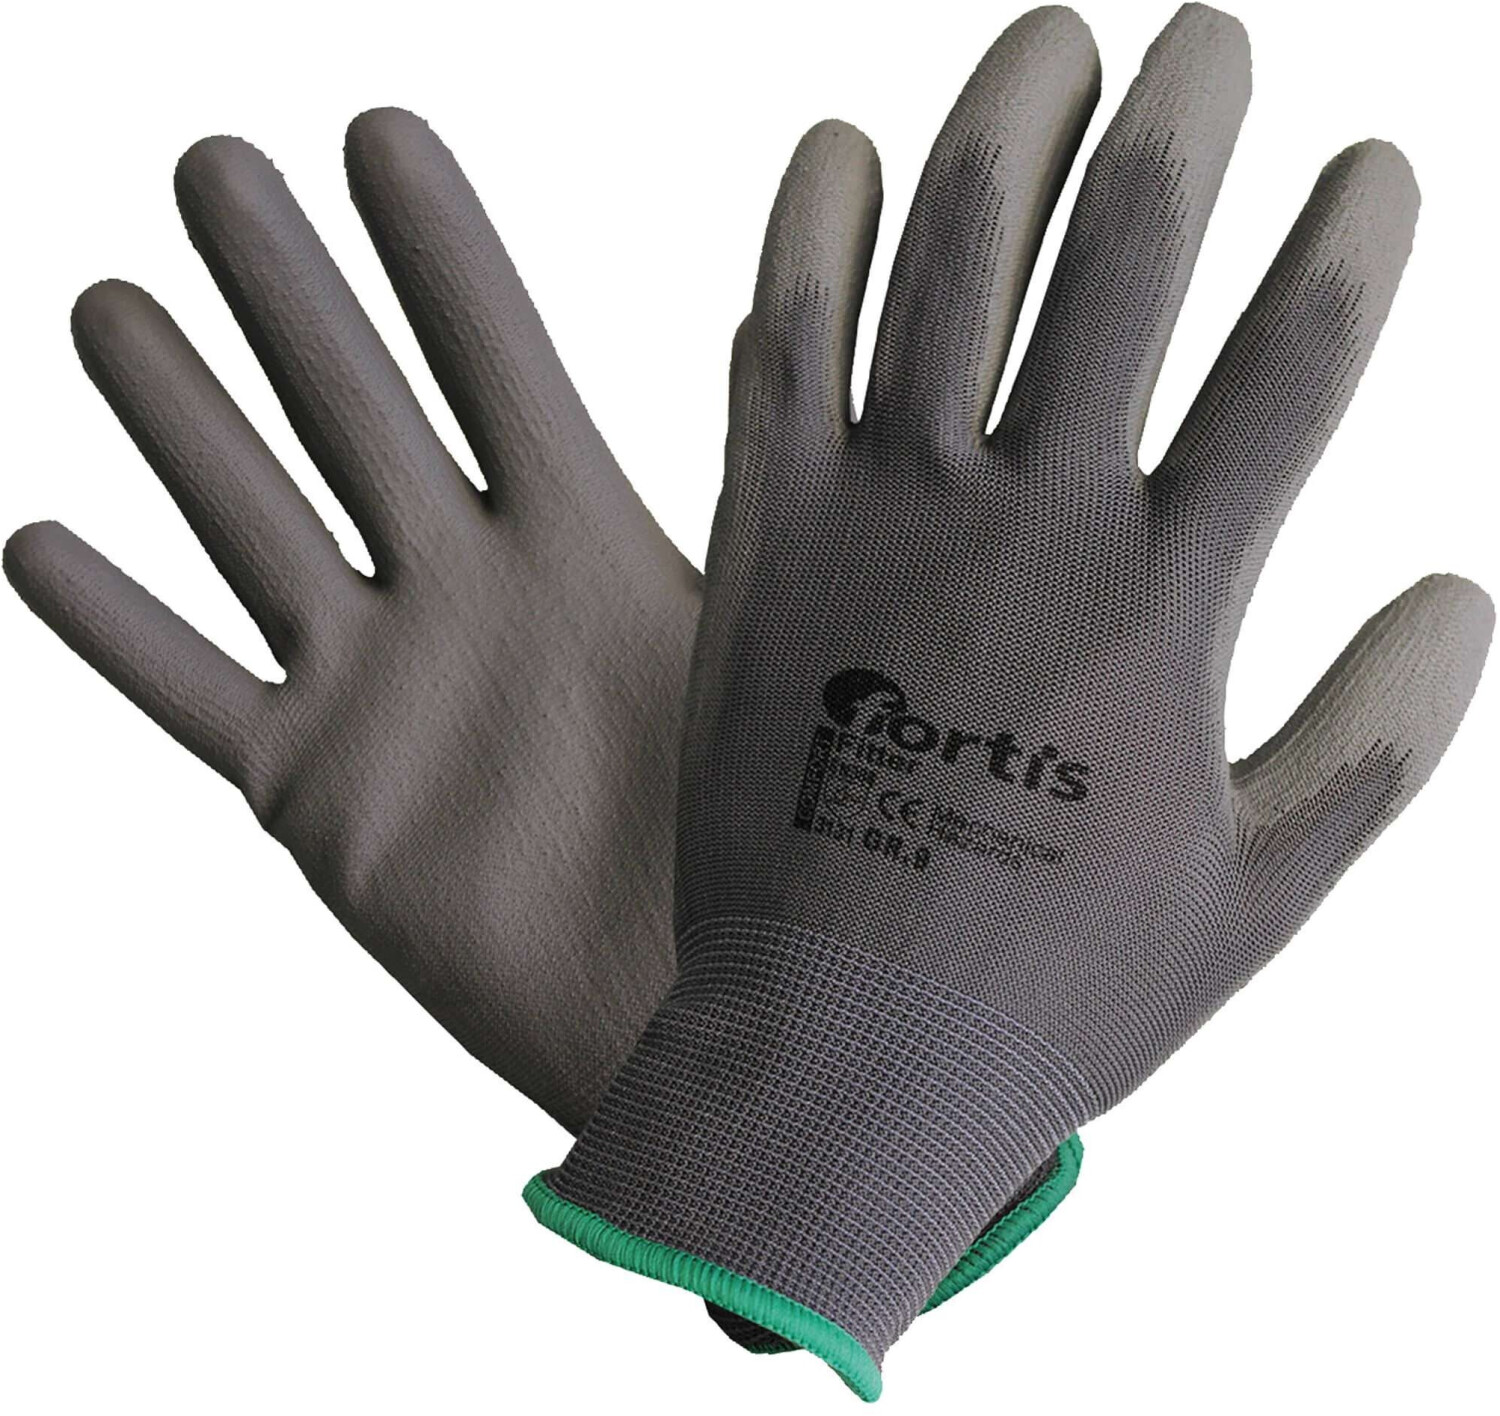 Fortis Handschuh Fitter Polyuretan / Nylon grau ab 0,82